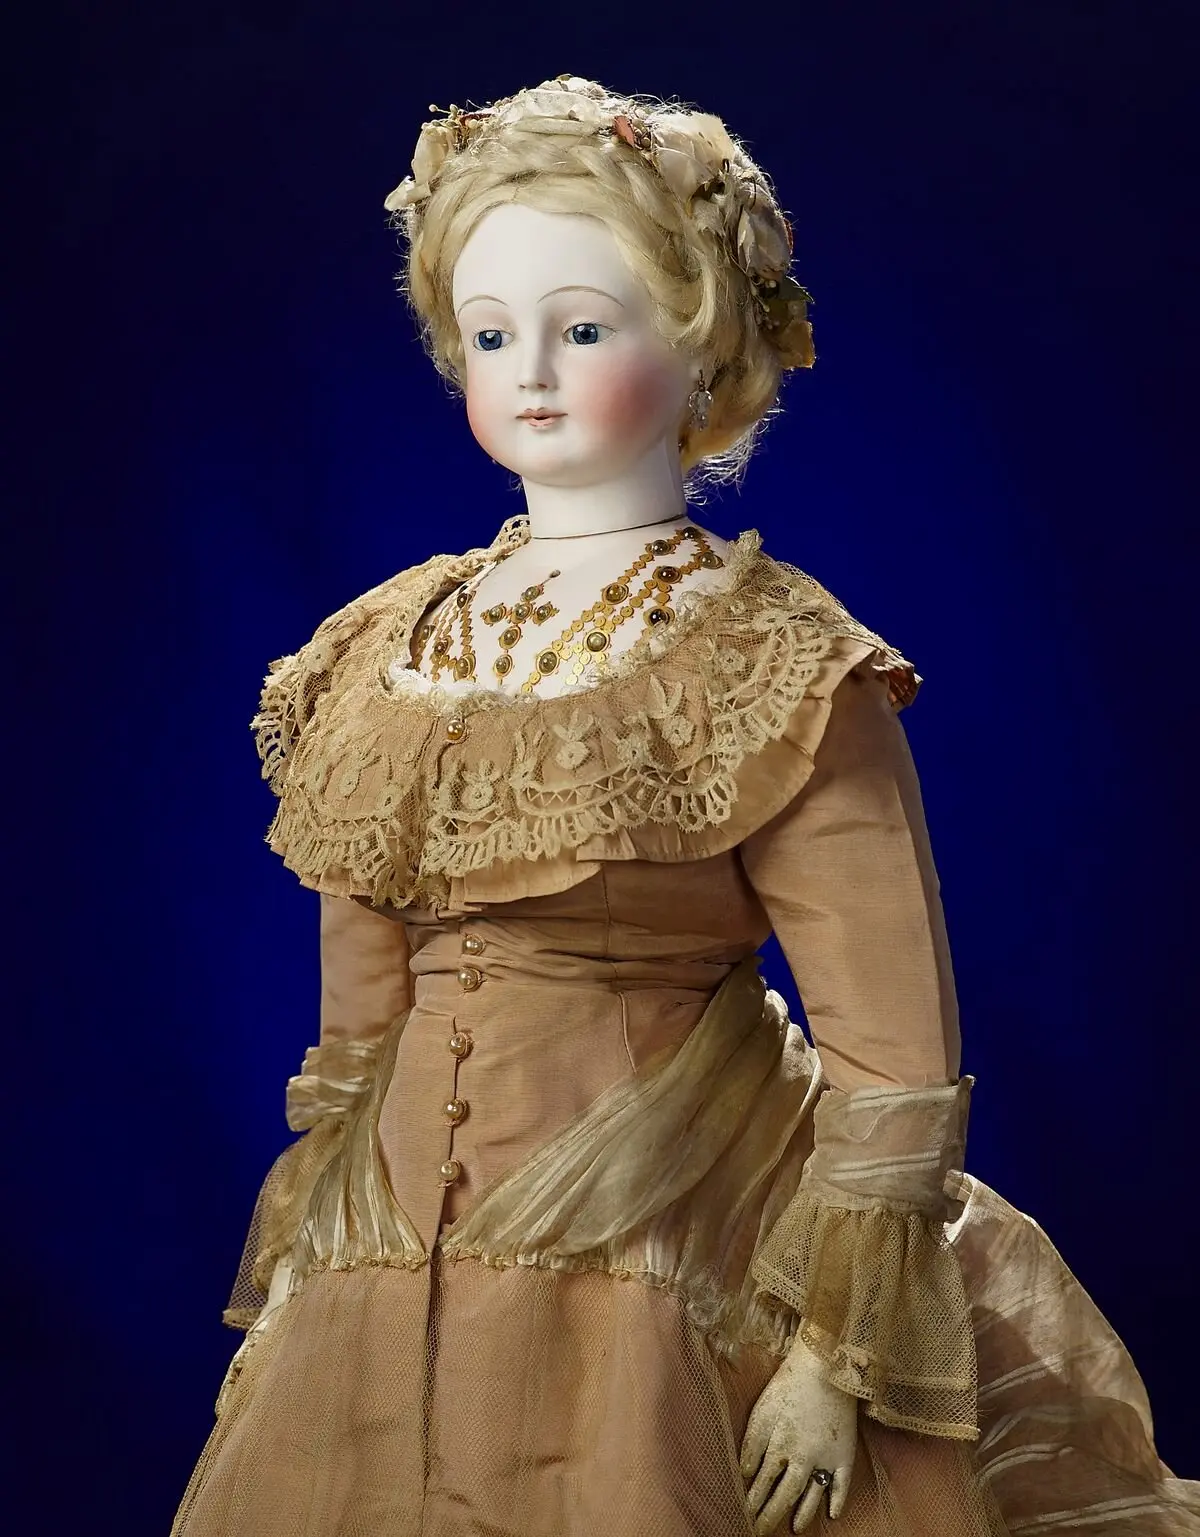 Antoine Edmund Rochard's doll